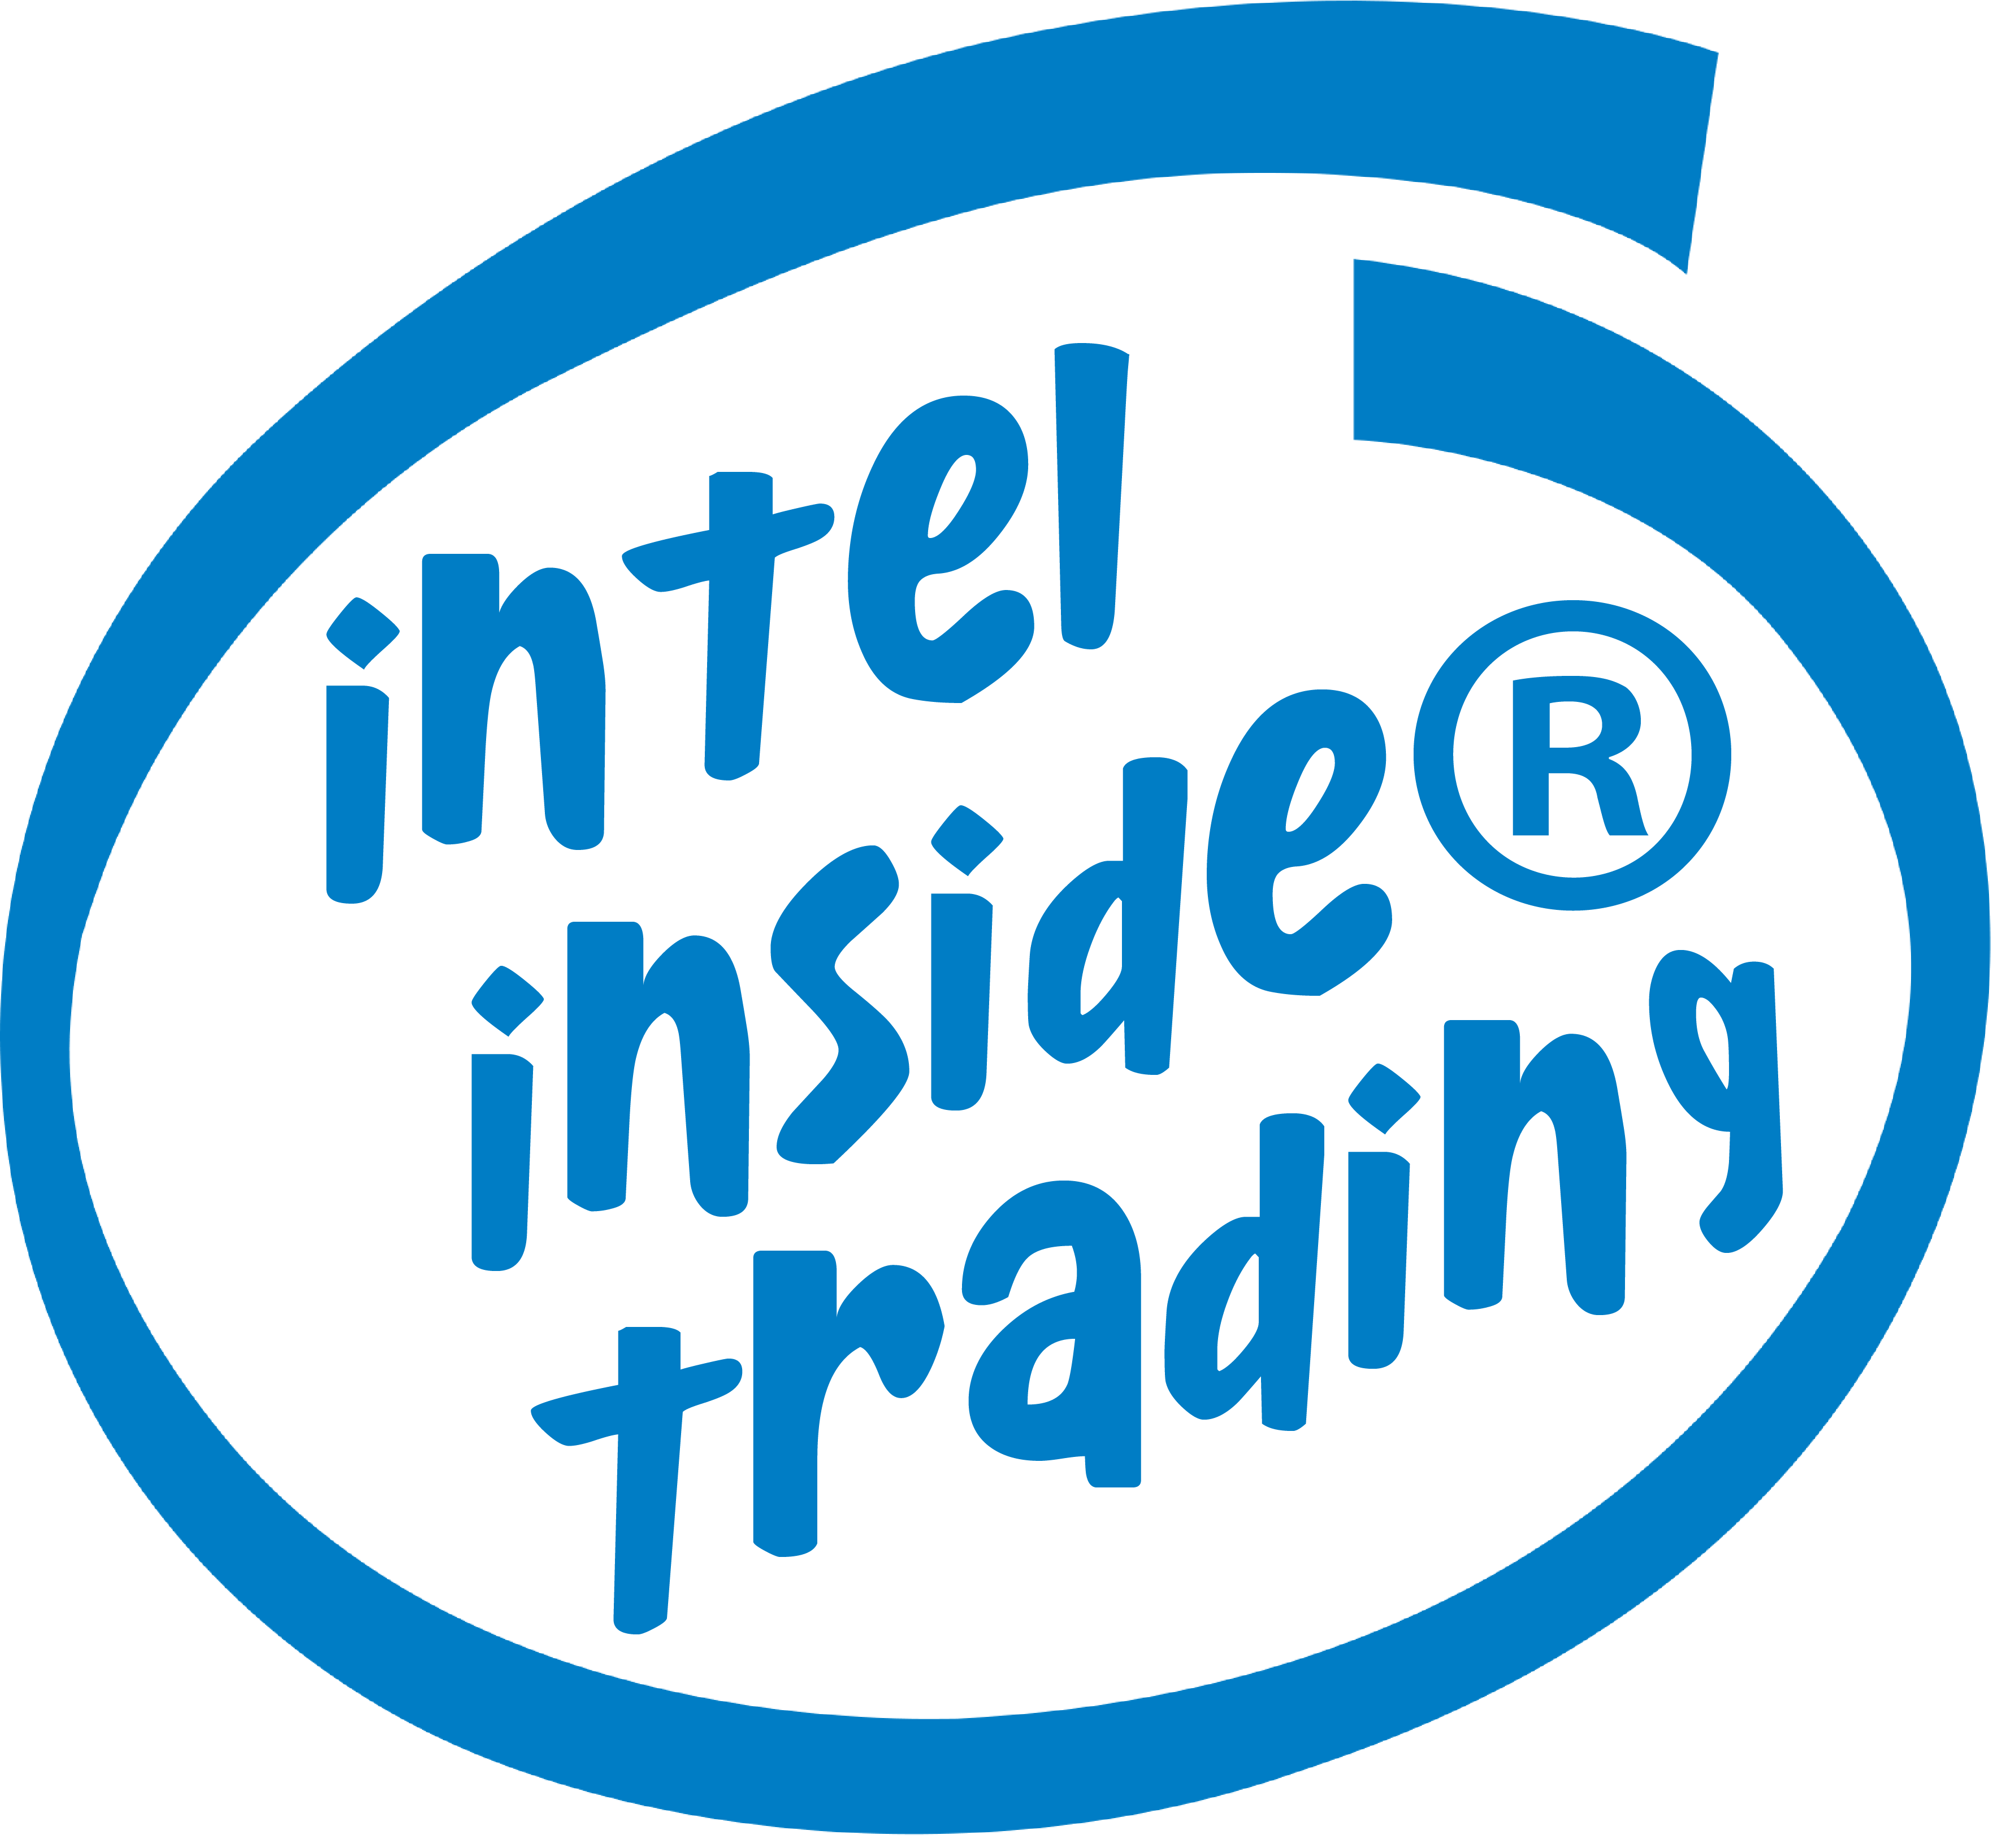 Old Intel Logo - The old Intel logo makes sense now